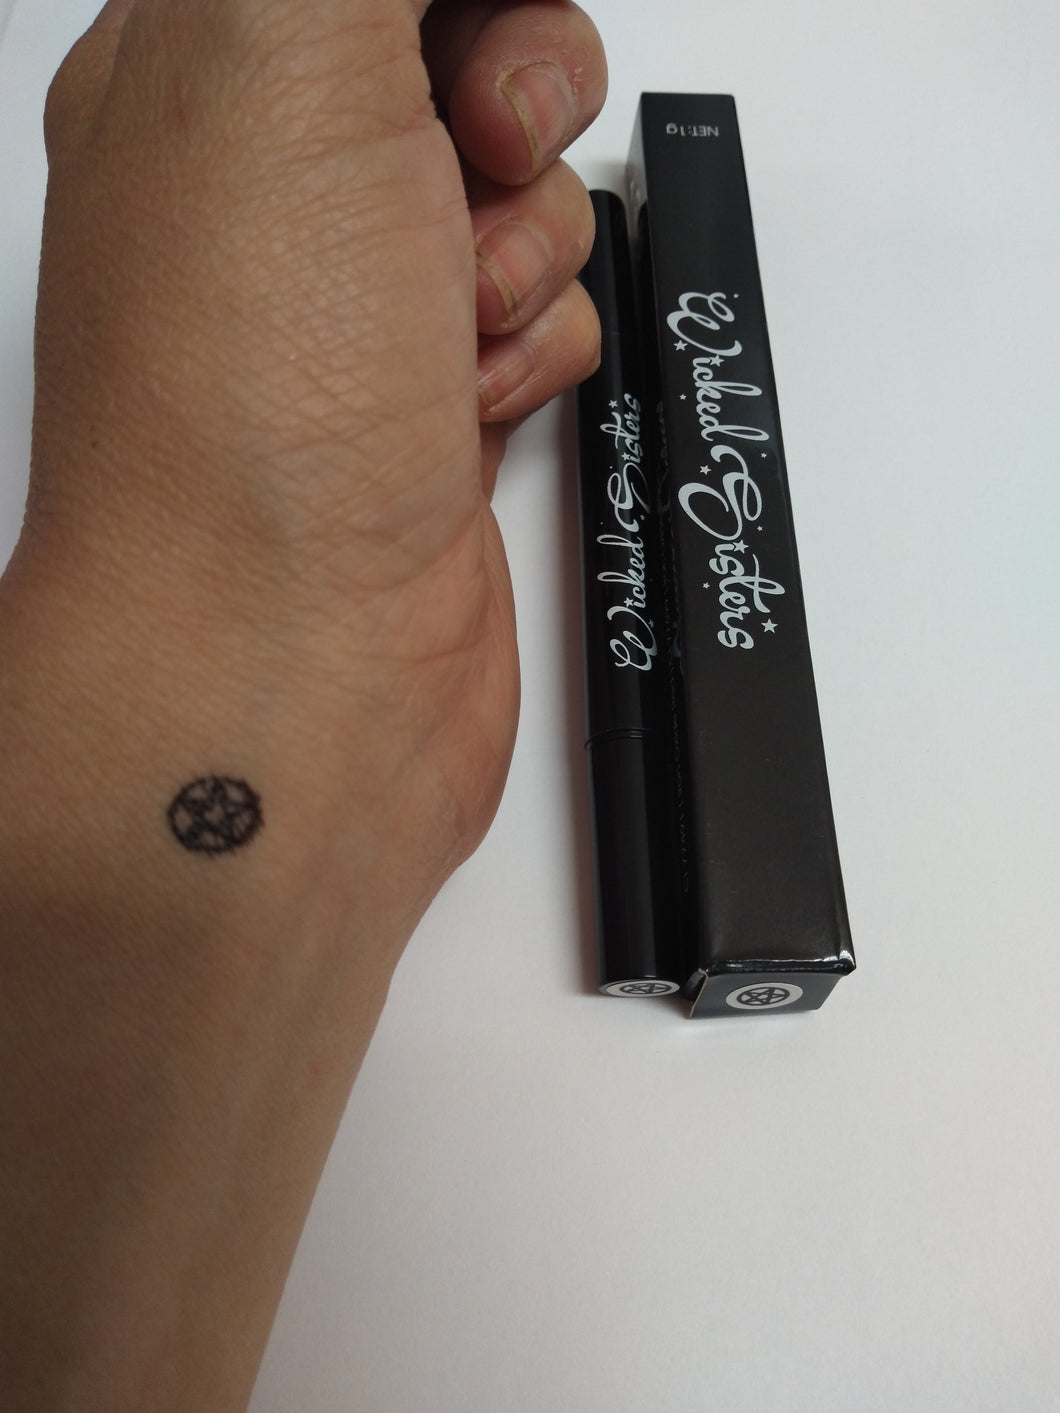 New! Black Eyeliner & Pentagram Shaped Stamp Pen